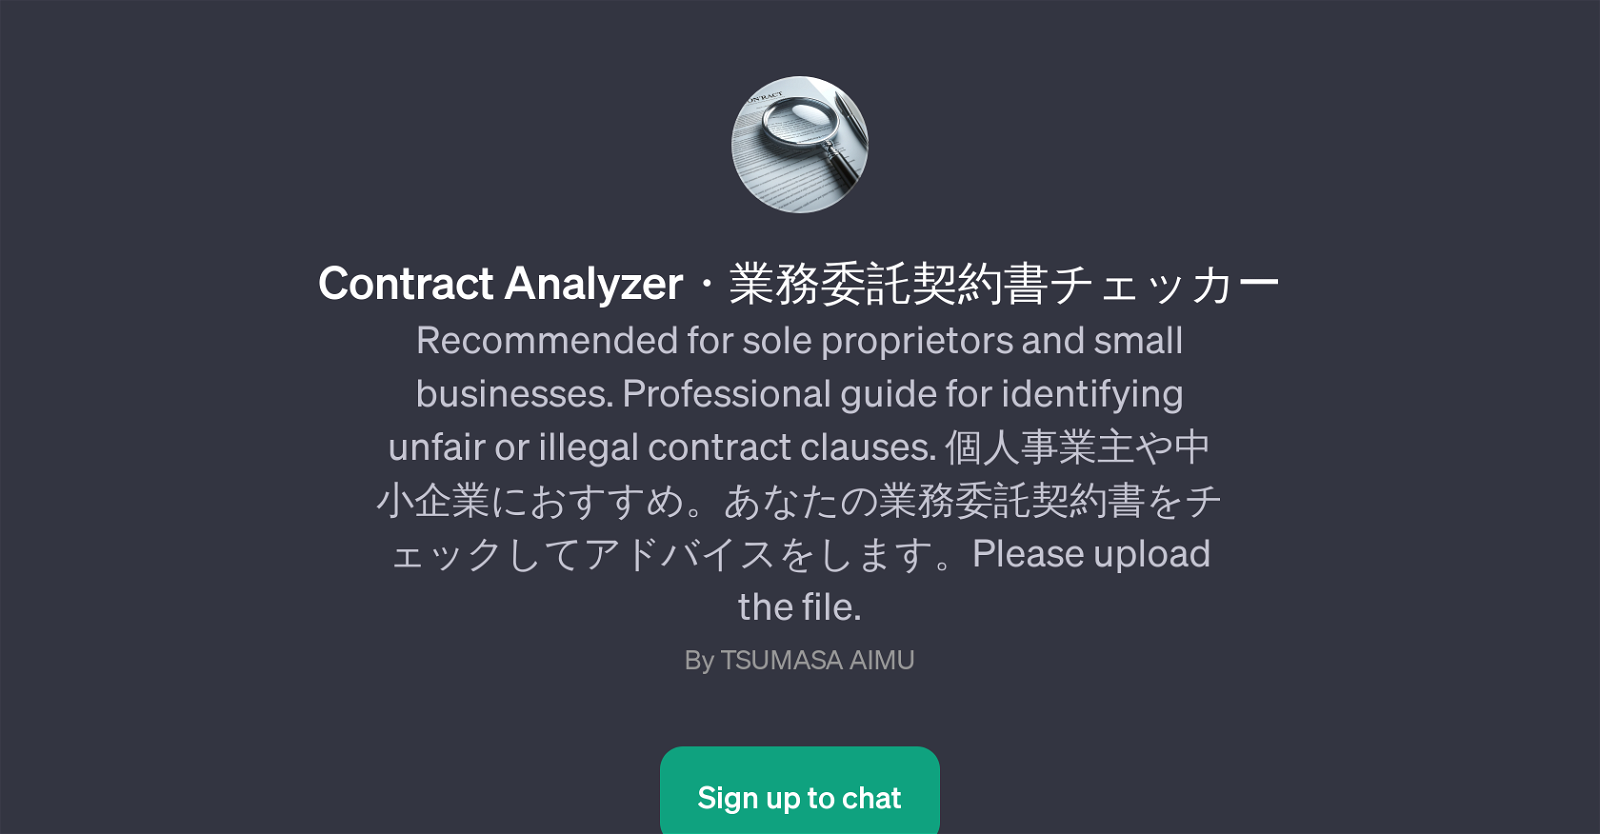 Contract Analyzer website